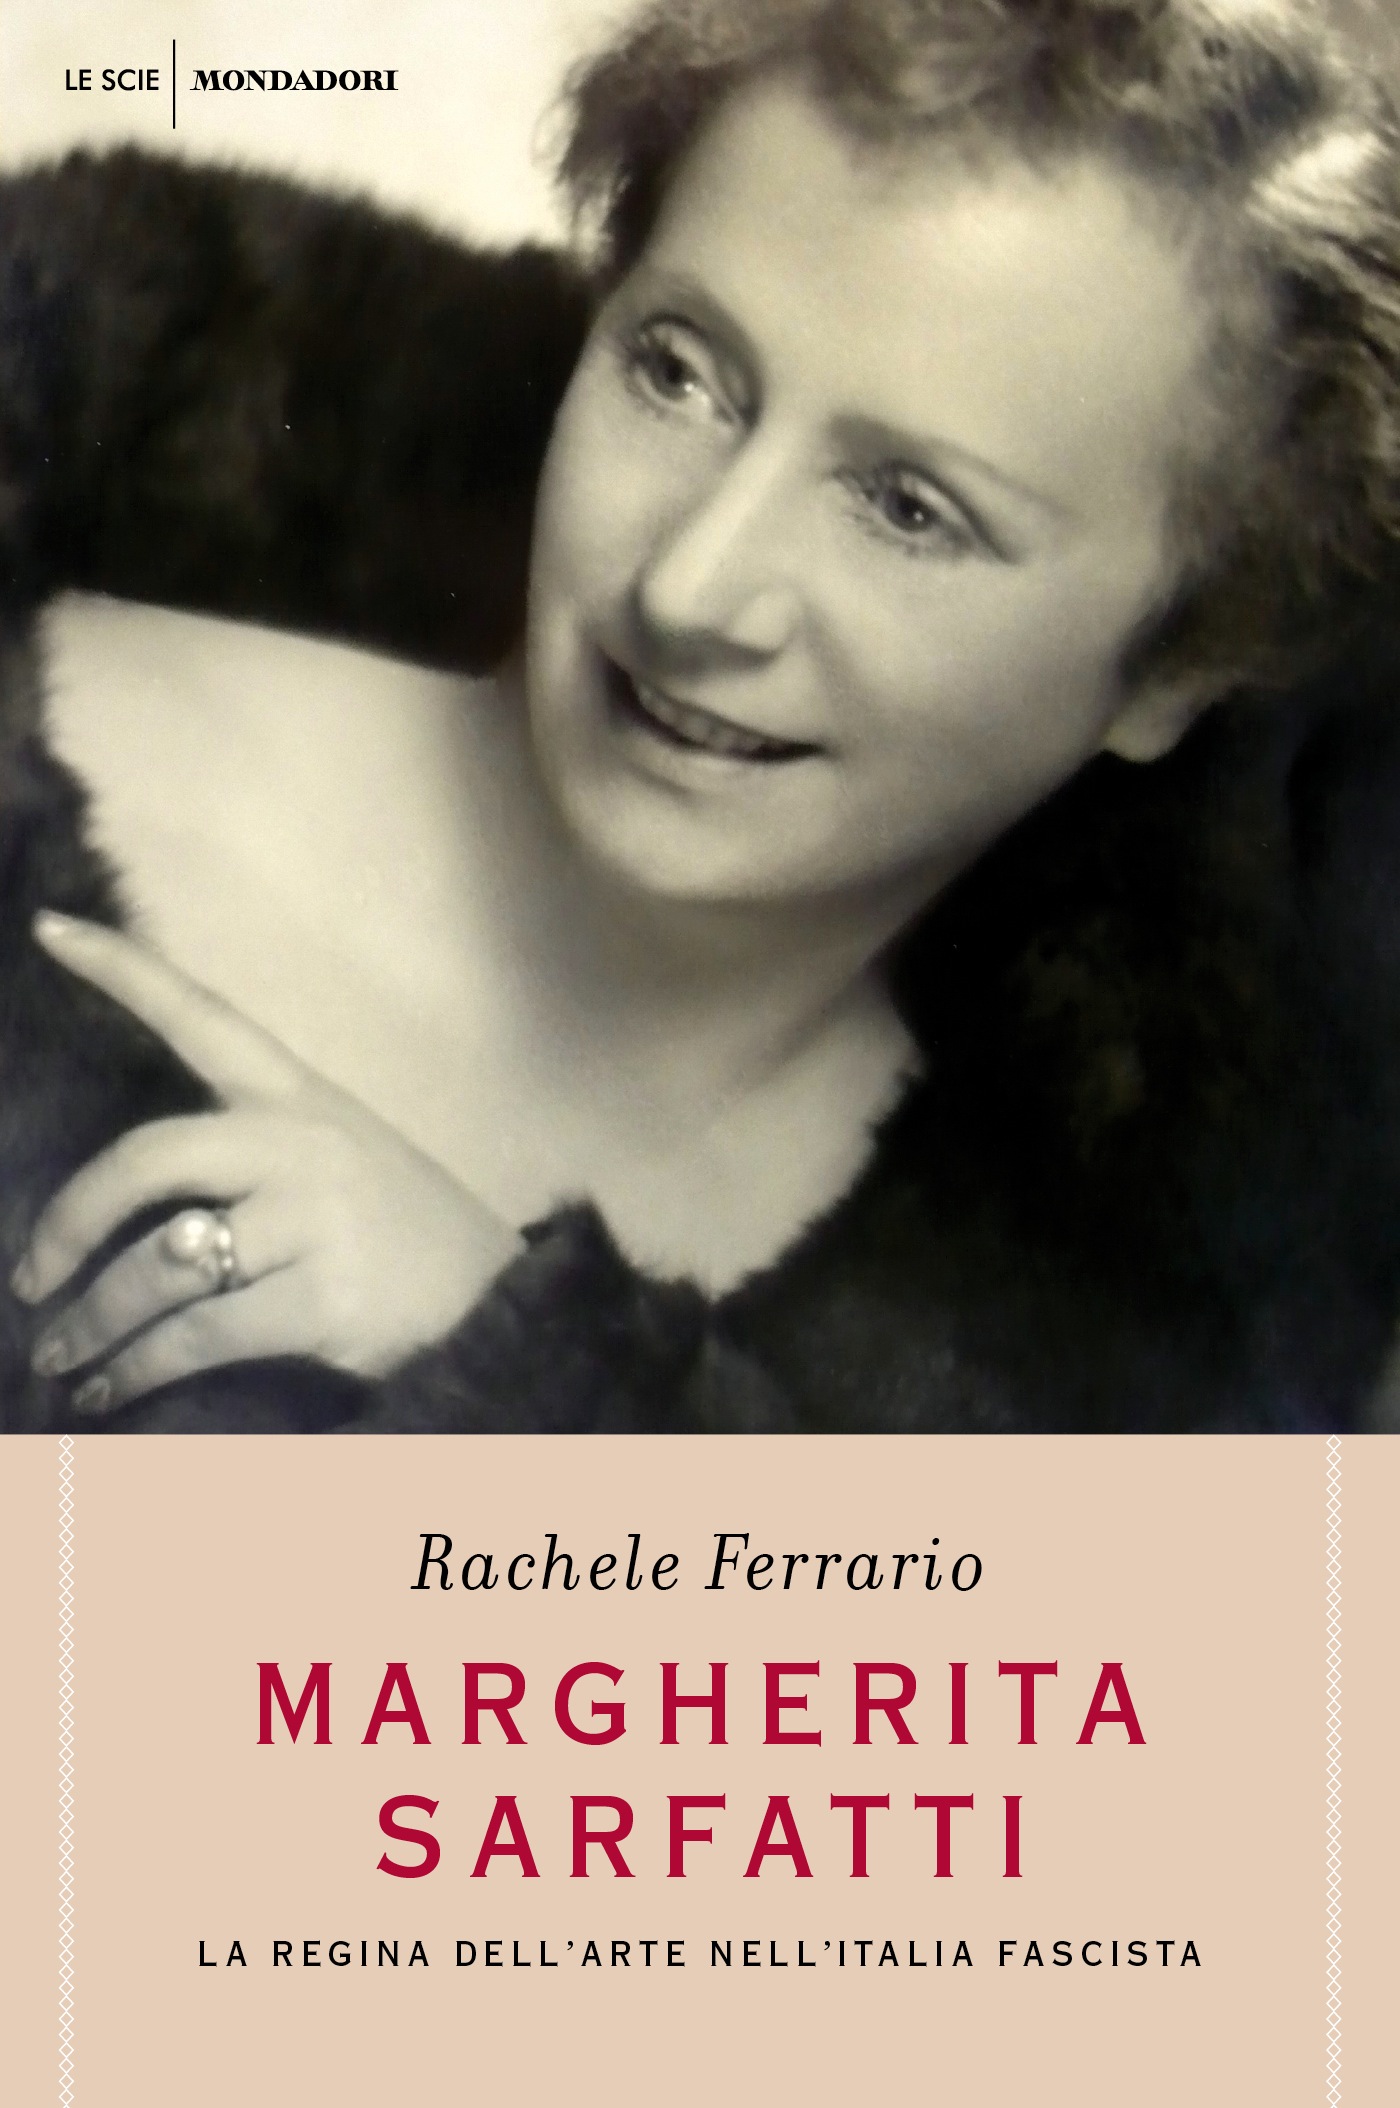 Margherita Sarfatti